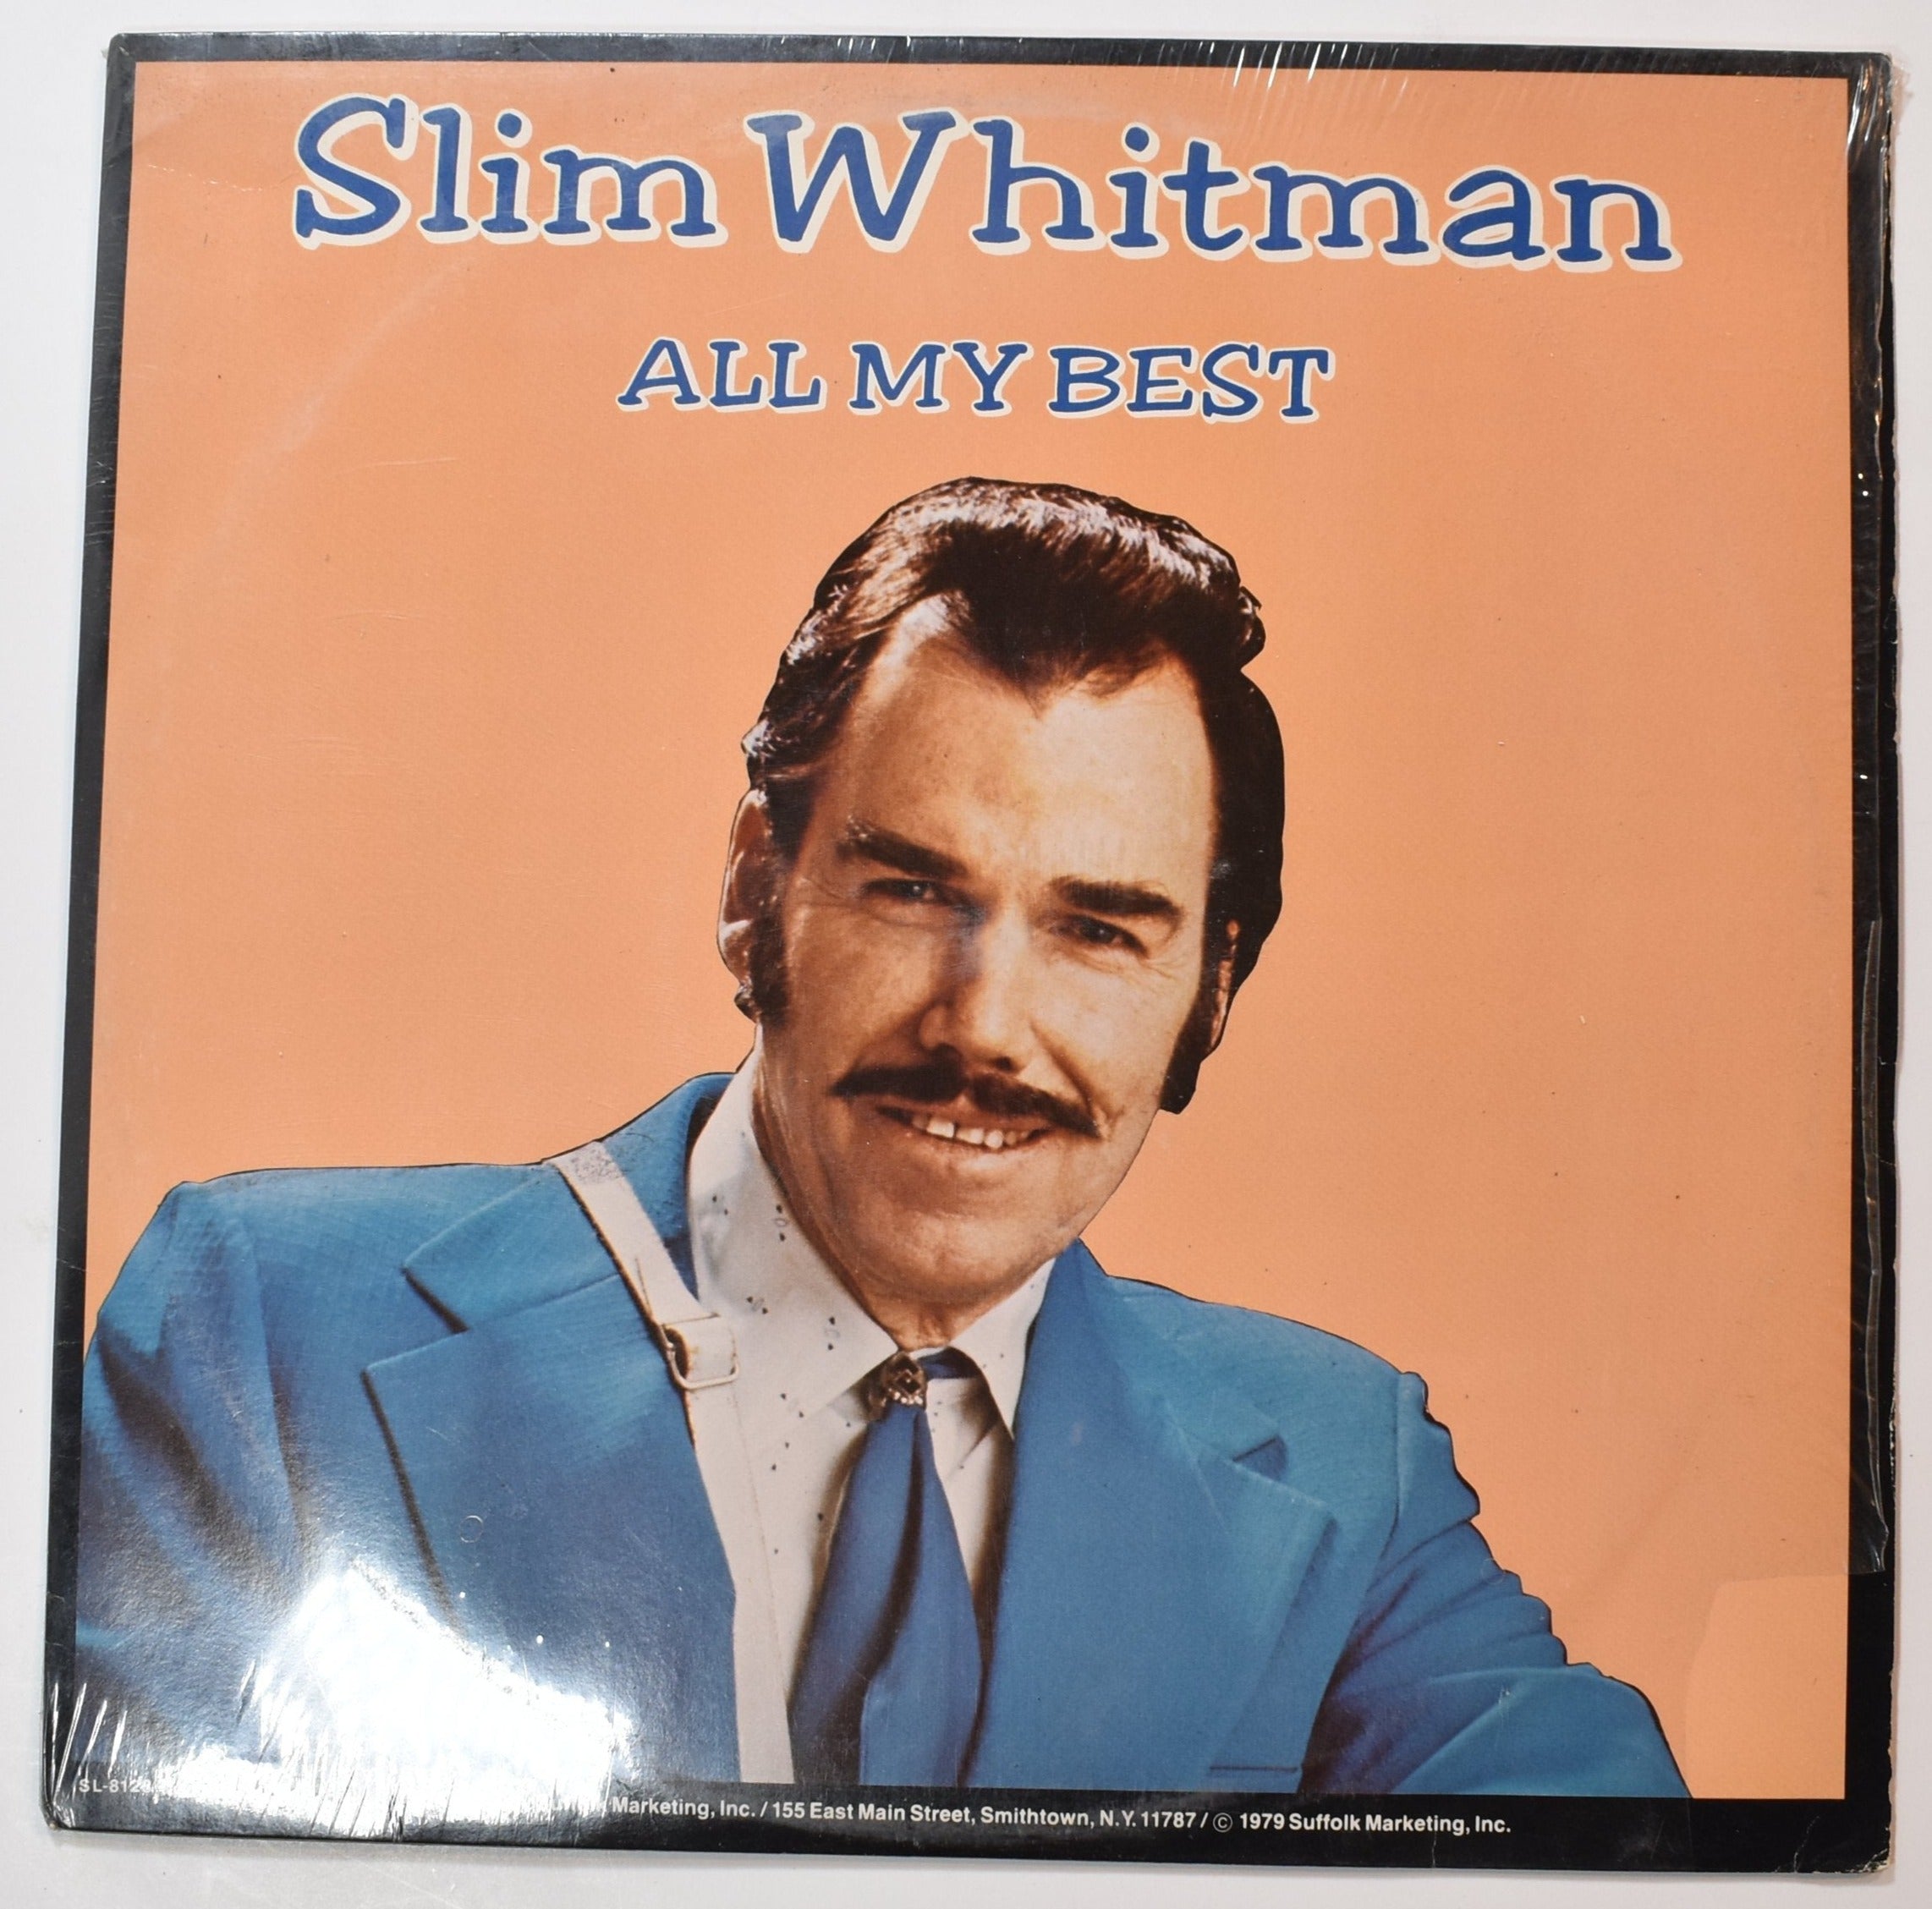 Vinyl Music Record Slim Whitman All my best used record